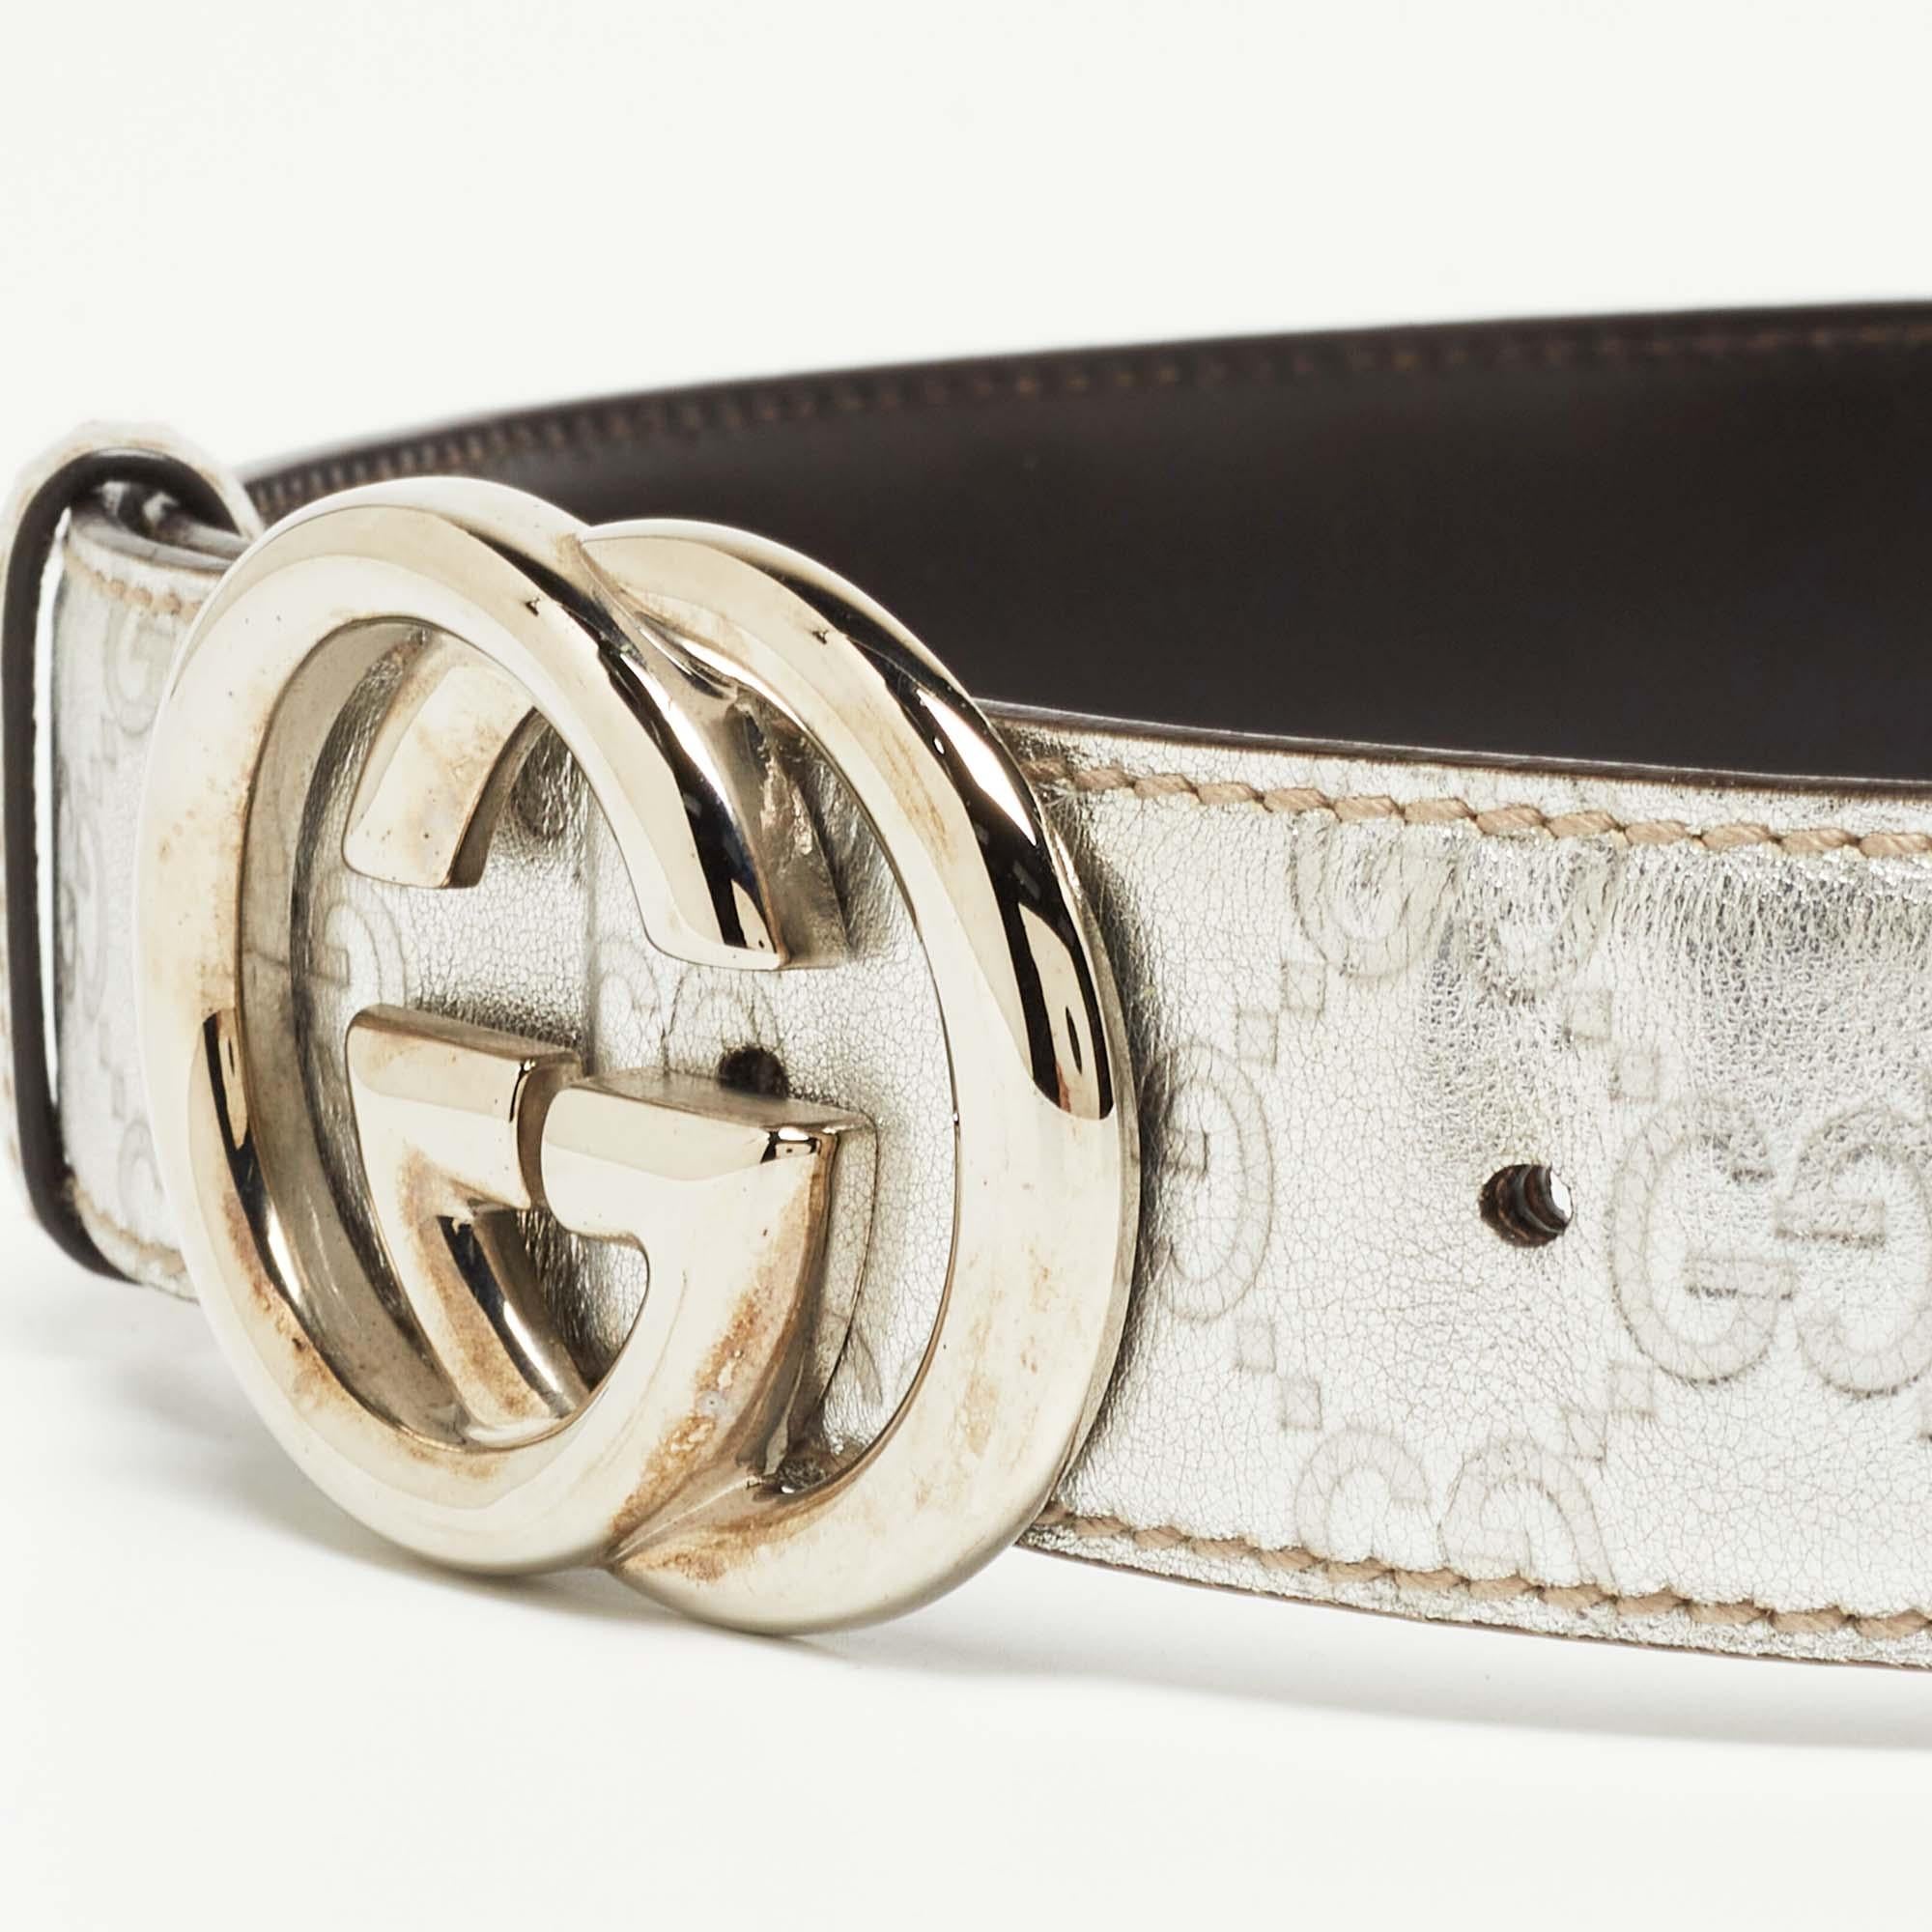 Women's Gucci Silver Guccissima Leather Interlocking G Buckle Belt 80CM